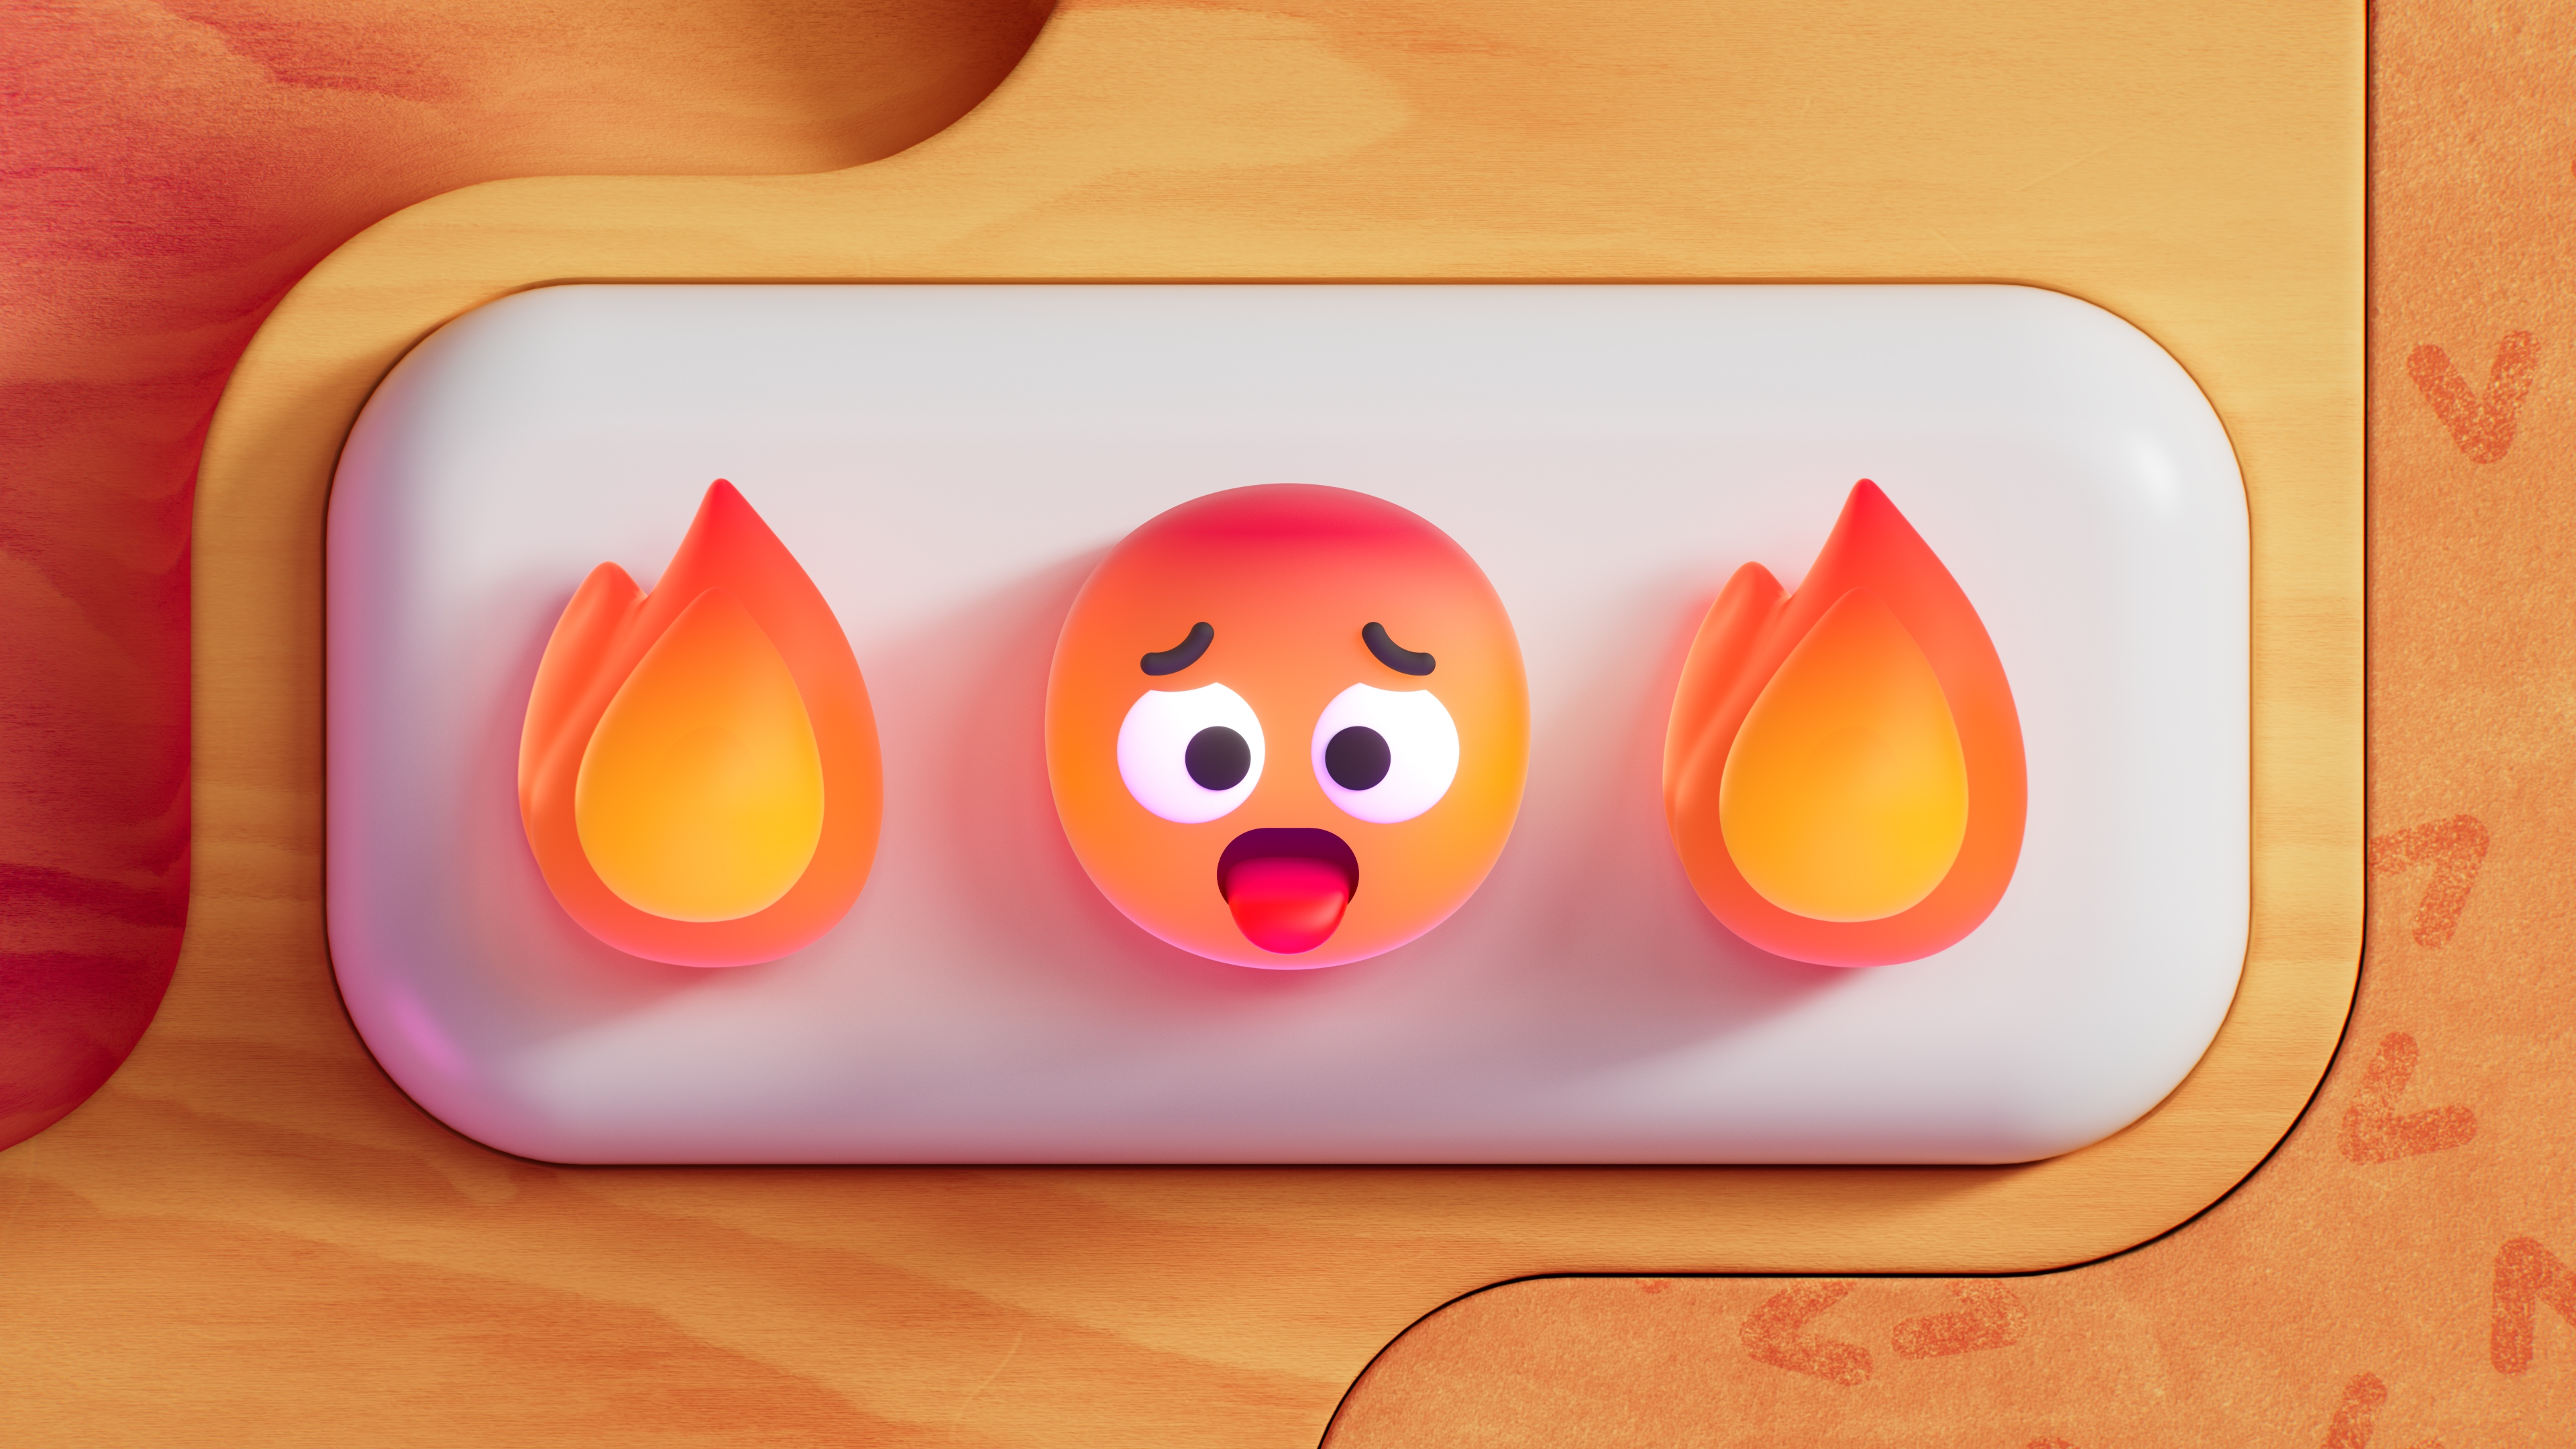 HD wallpaper, Emoticons, 3D Background, Emoji, Smiley, Fire